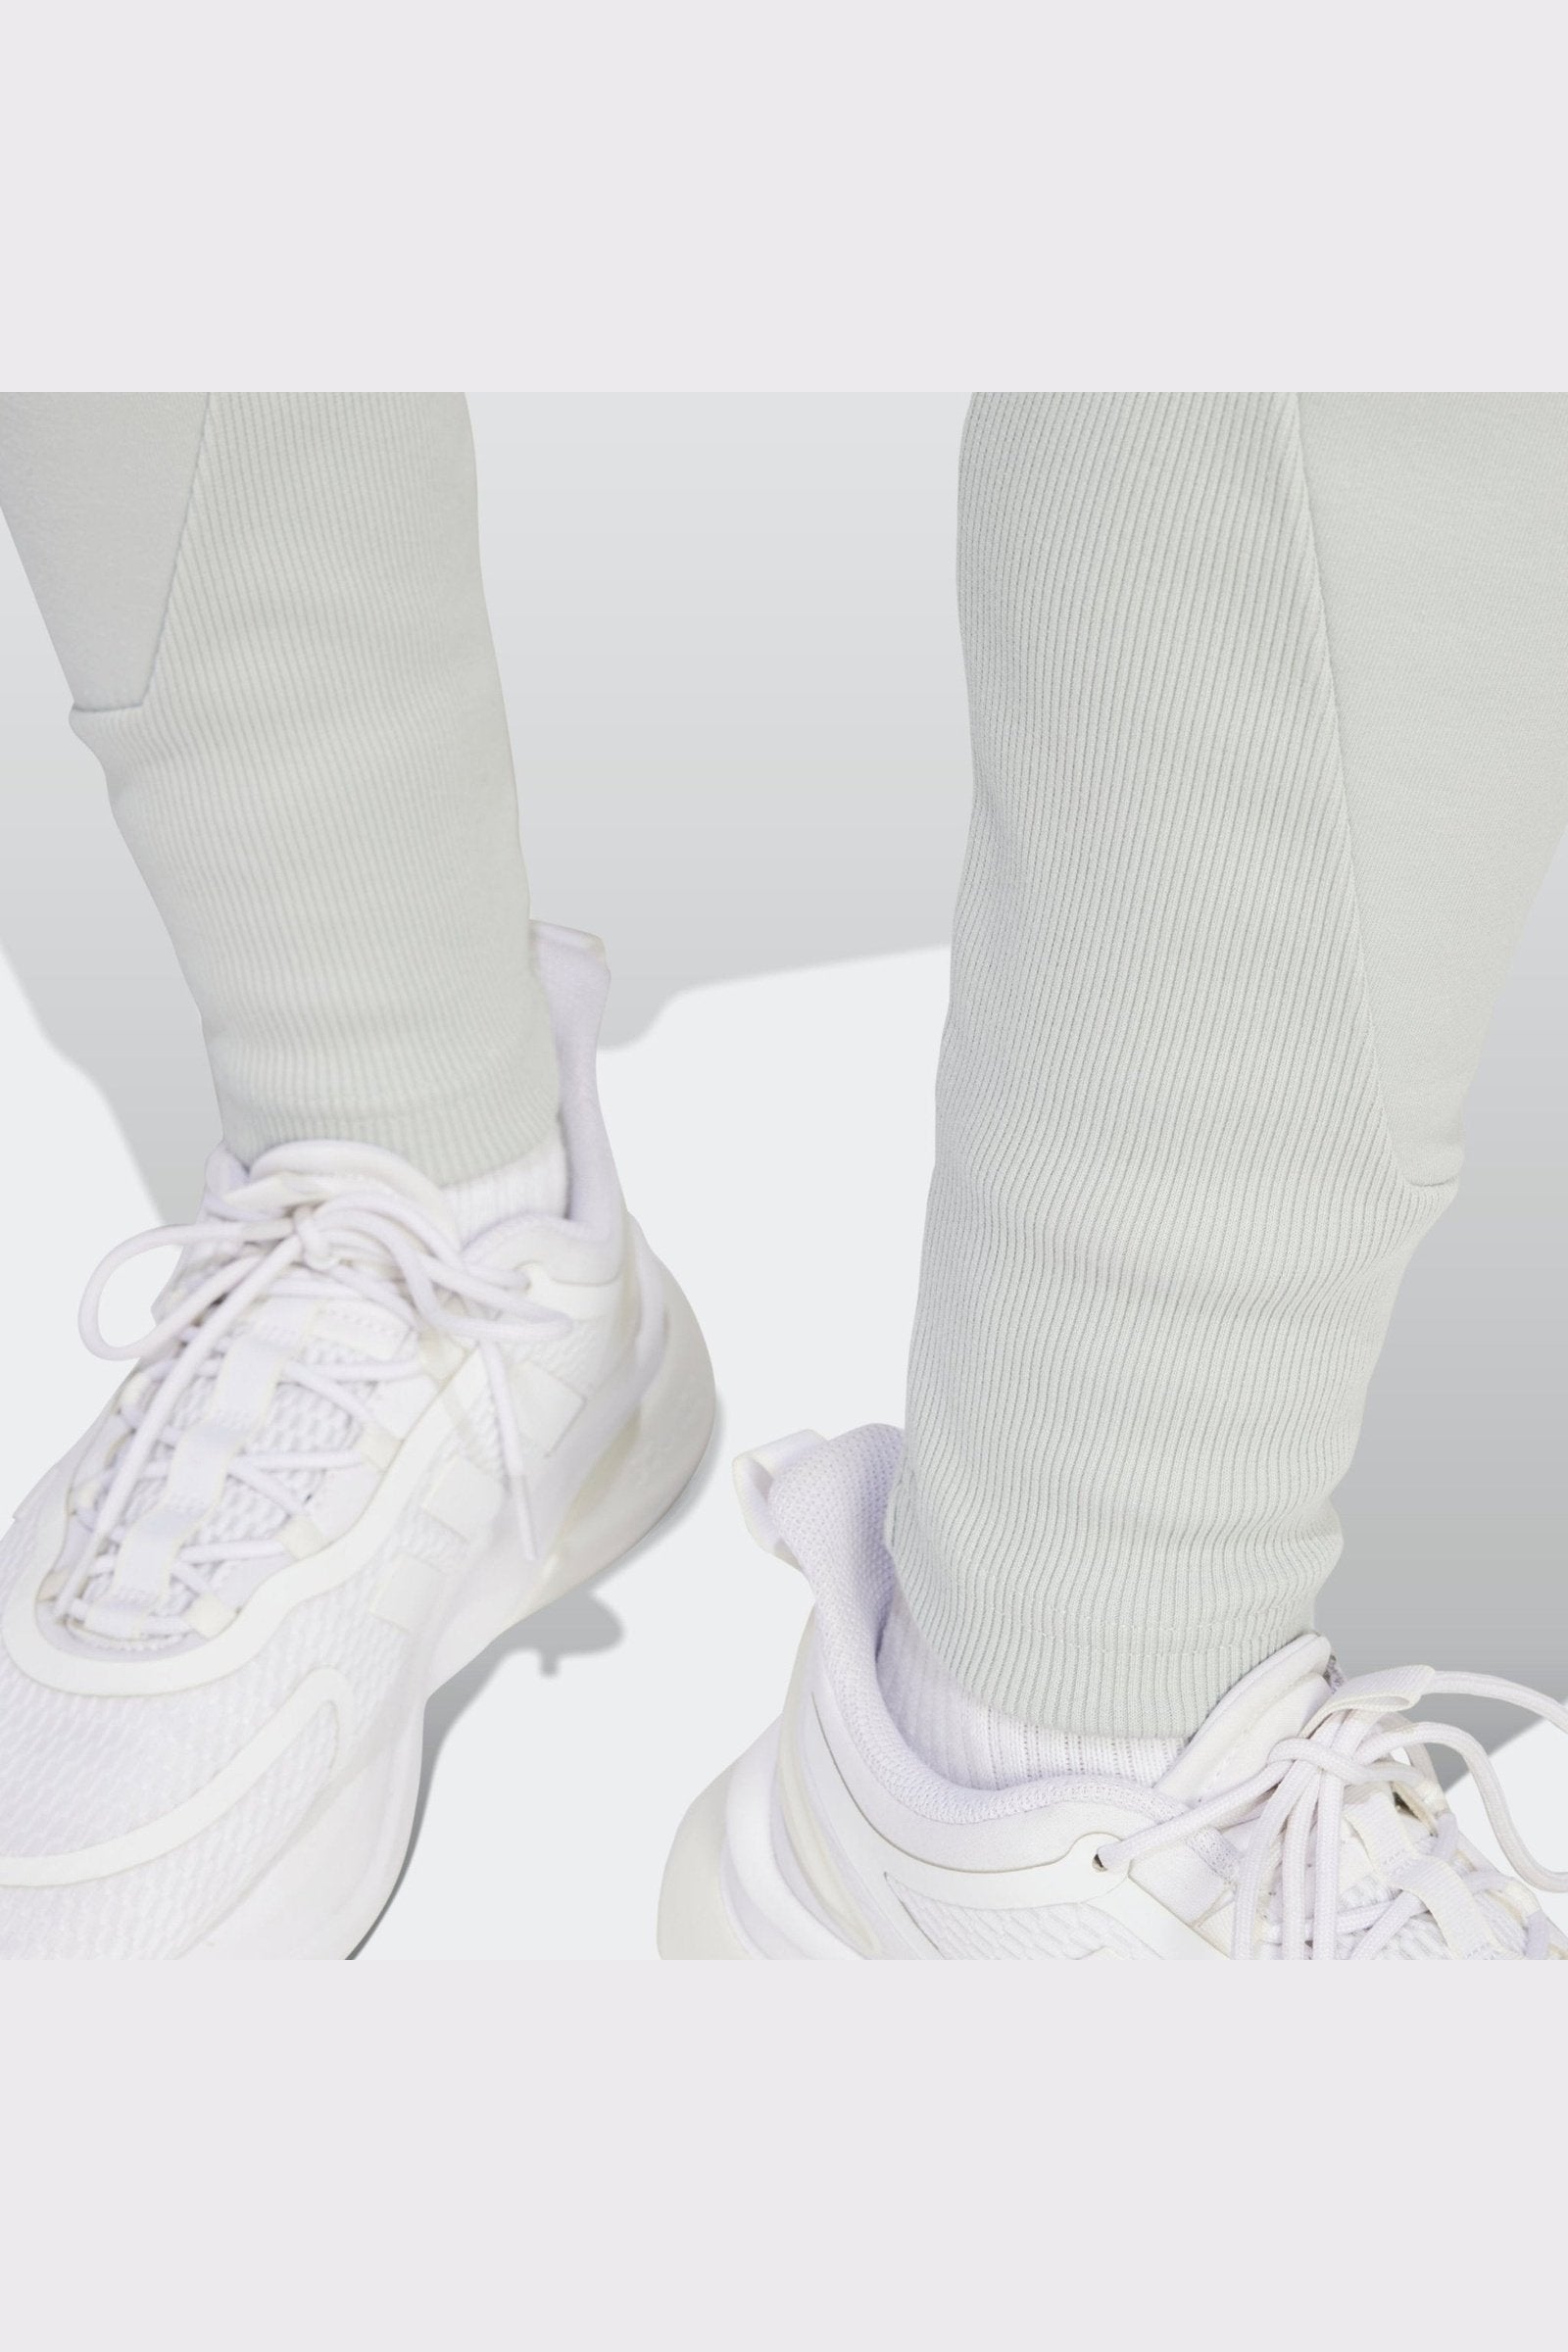 ADIDAS - מכנסיים ארוכים לגברים Z.N.E. PREMIUM בצבע לבן - MASHBIR//365